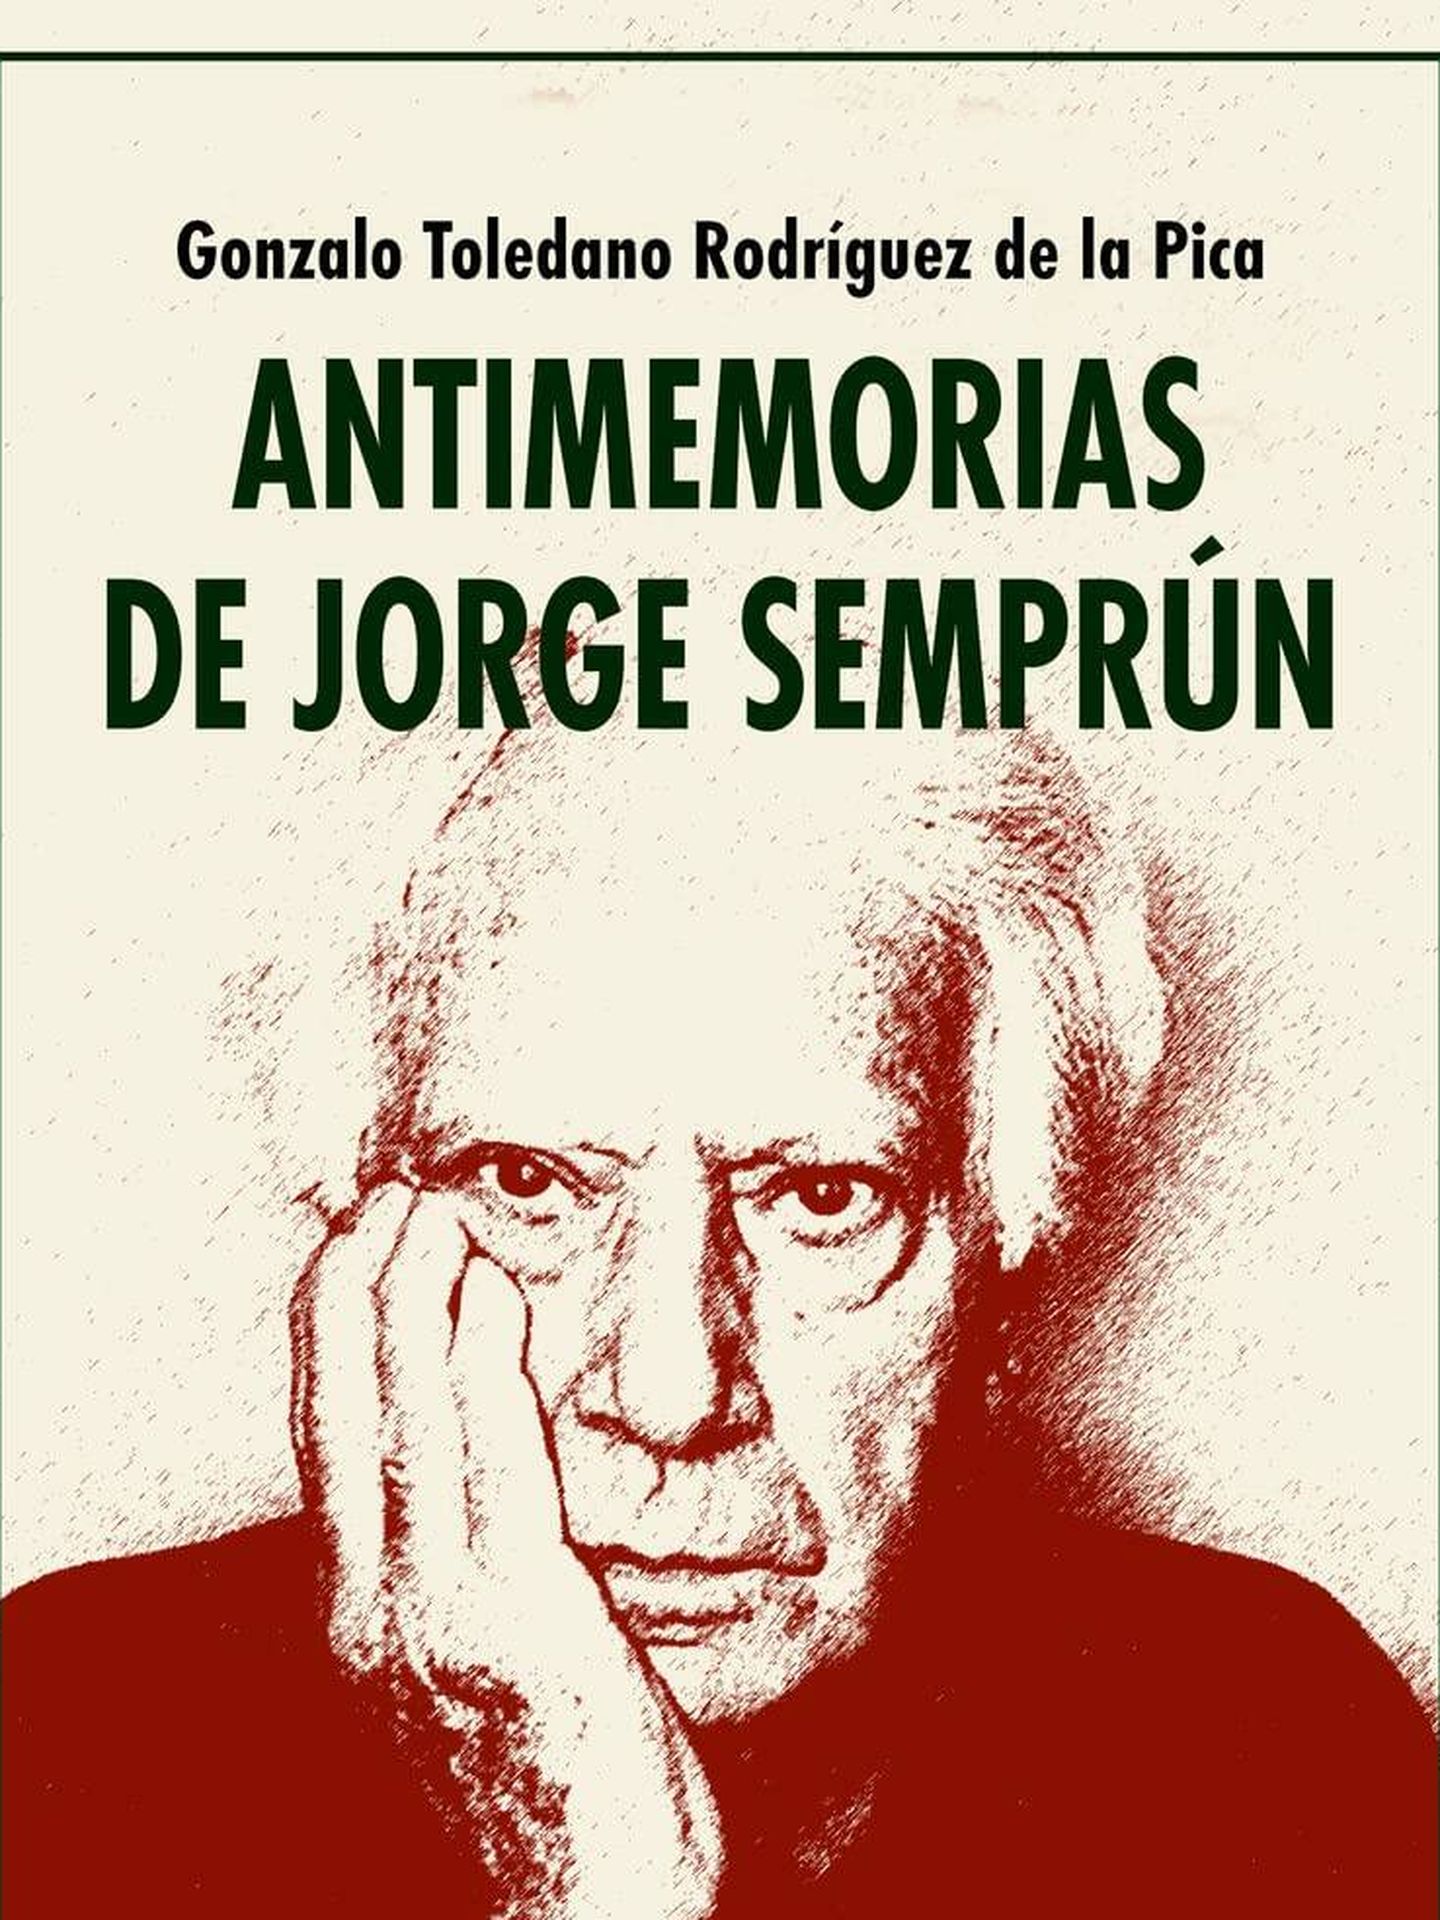 'Antimemorias de Jorge Semprún' 